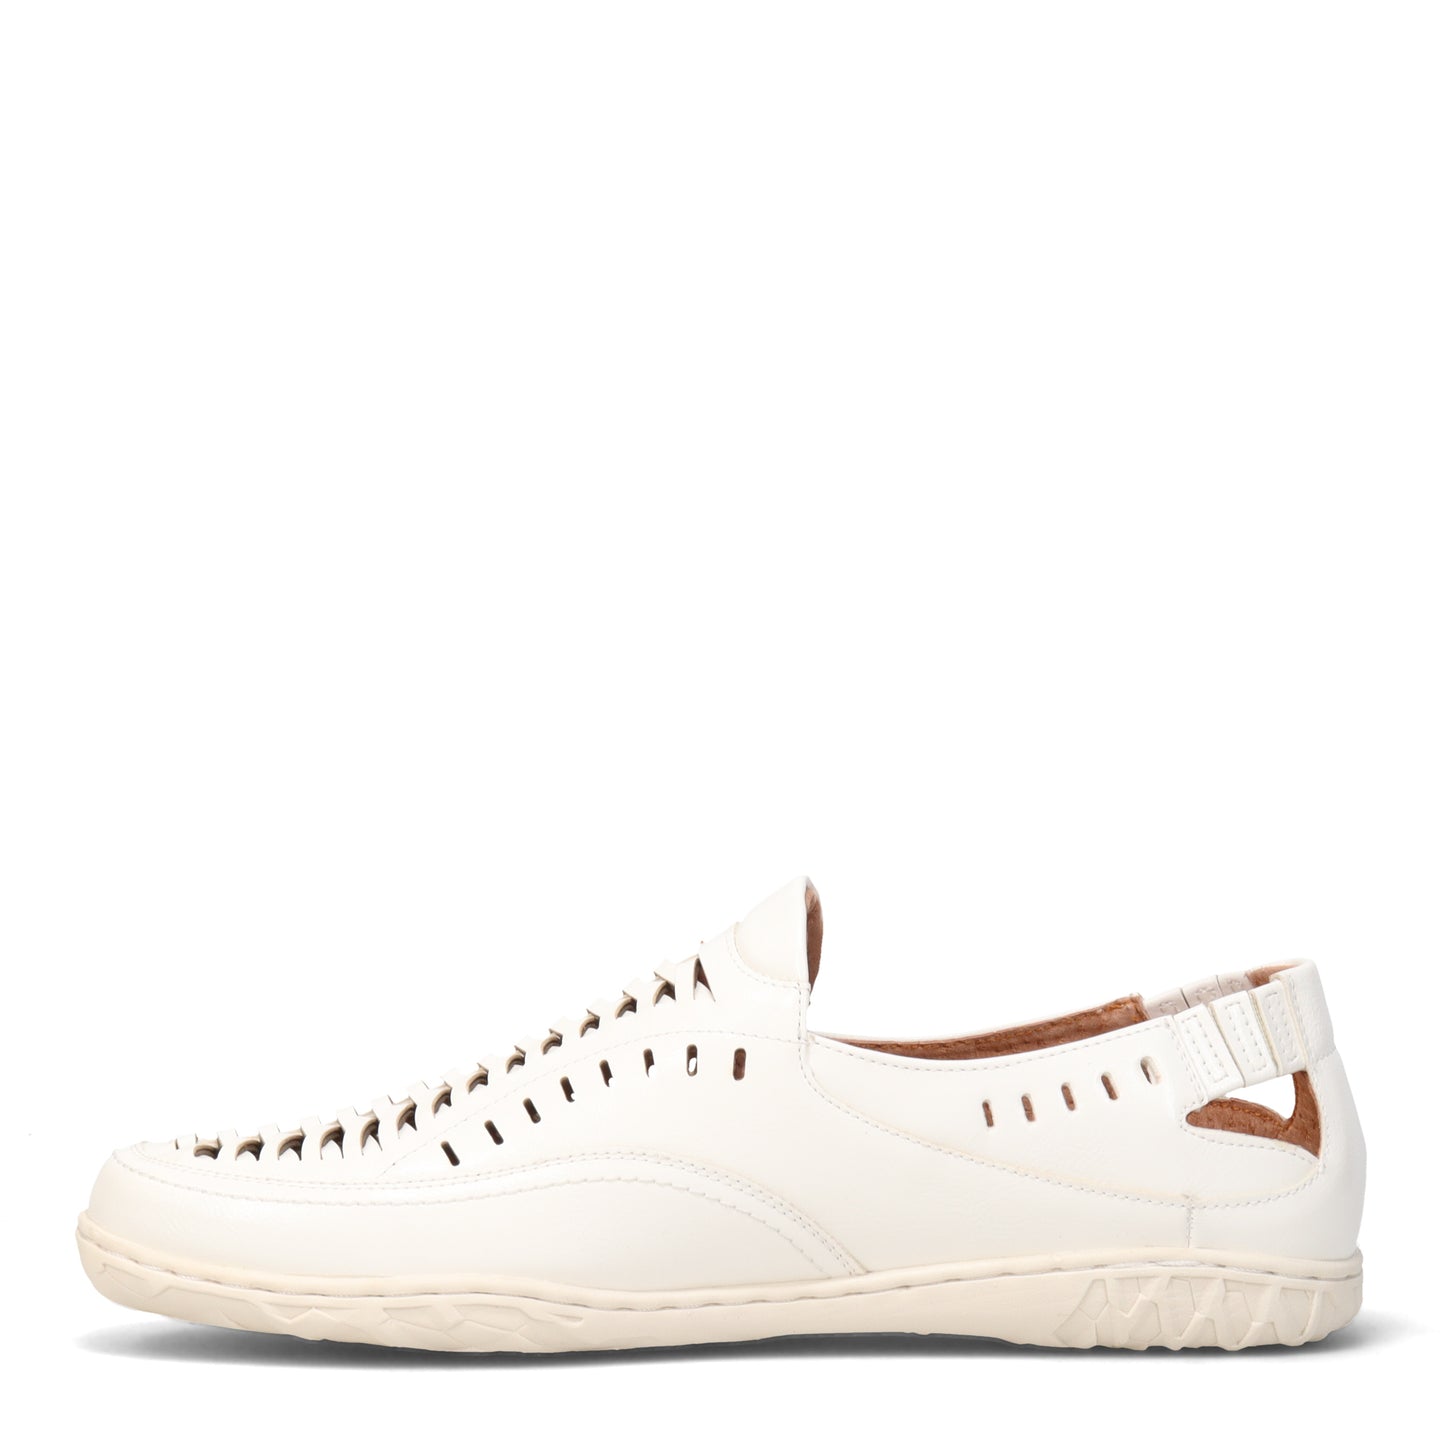 Peltz Shoes  Men's Stacy Adams Ibiza Slip-On WHITE 25440-100